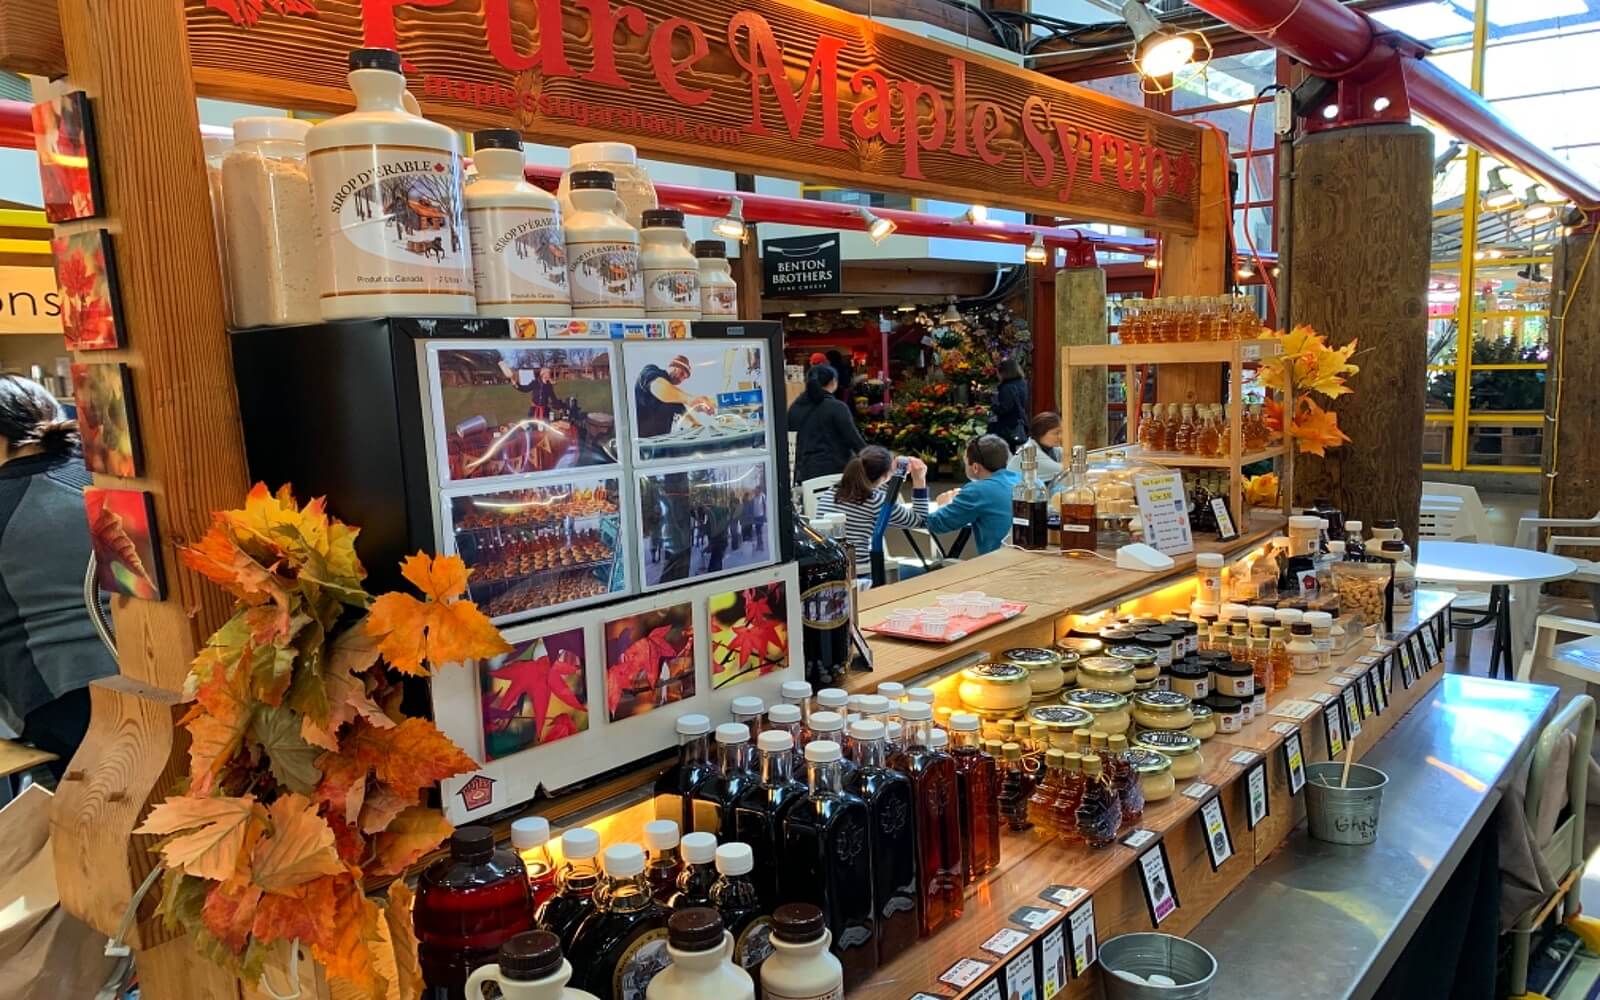 The Maple Syrup vendor at Granville Island Market